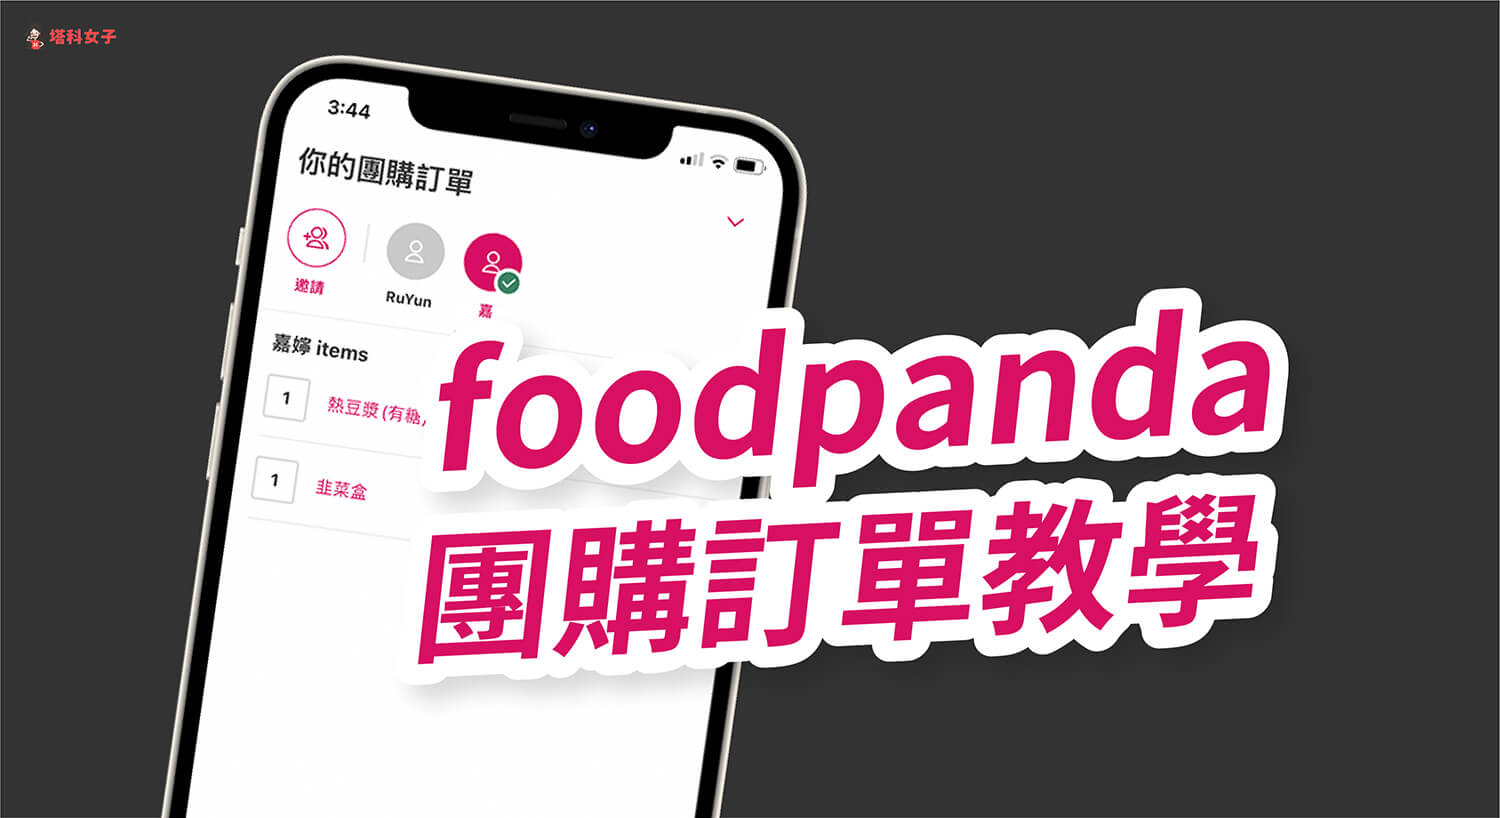 foodpanda 團購訂單功能教學，分享連結給朋友各自點餐再統一結帳